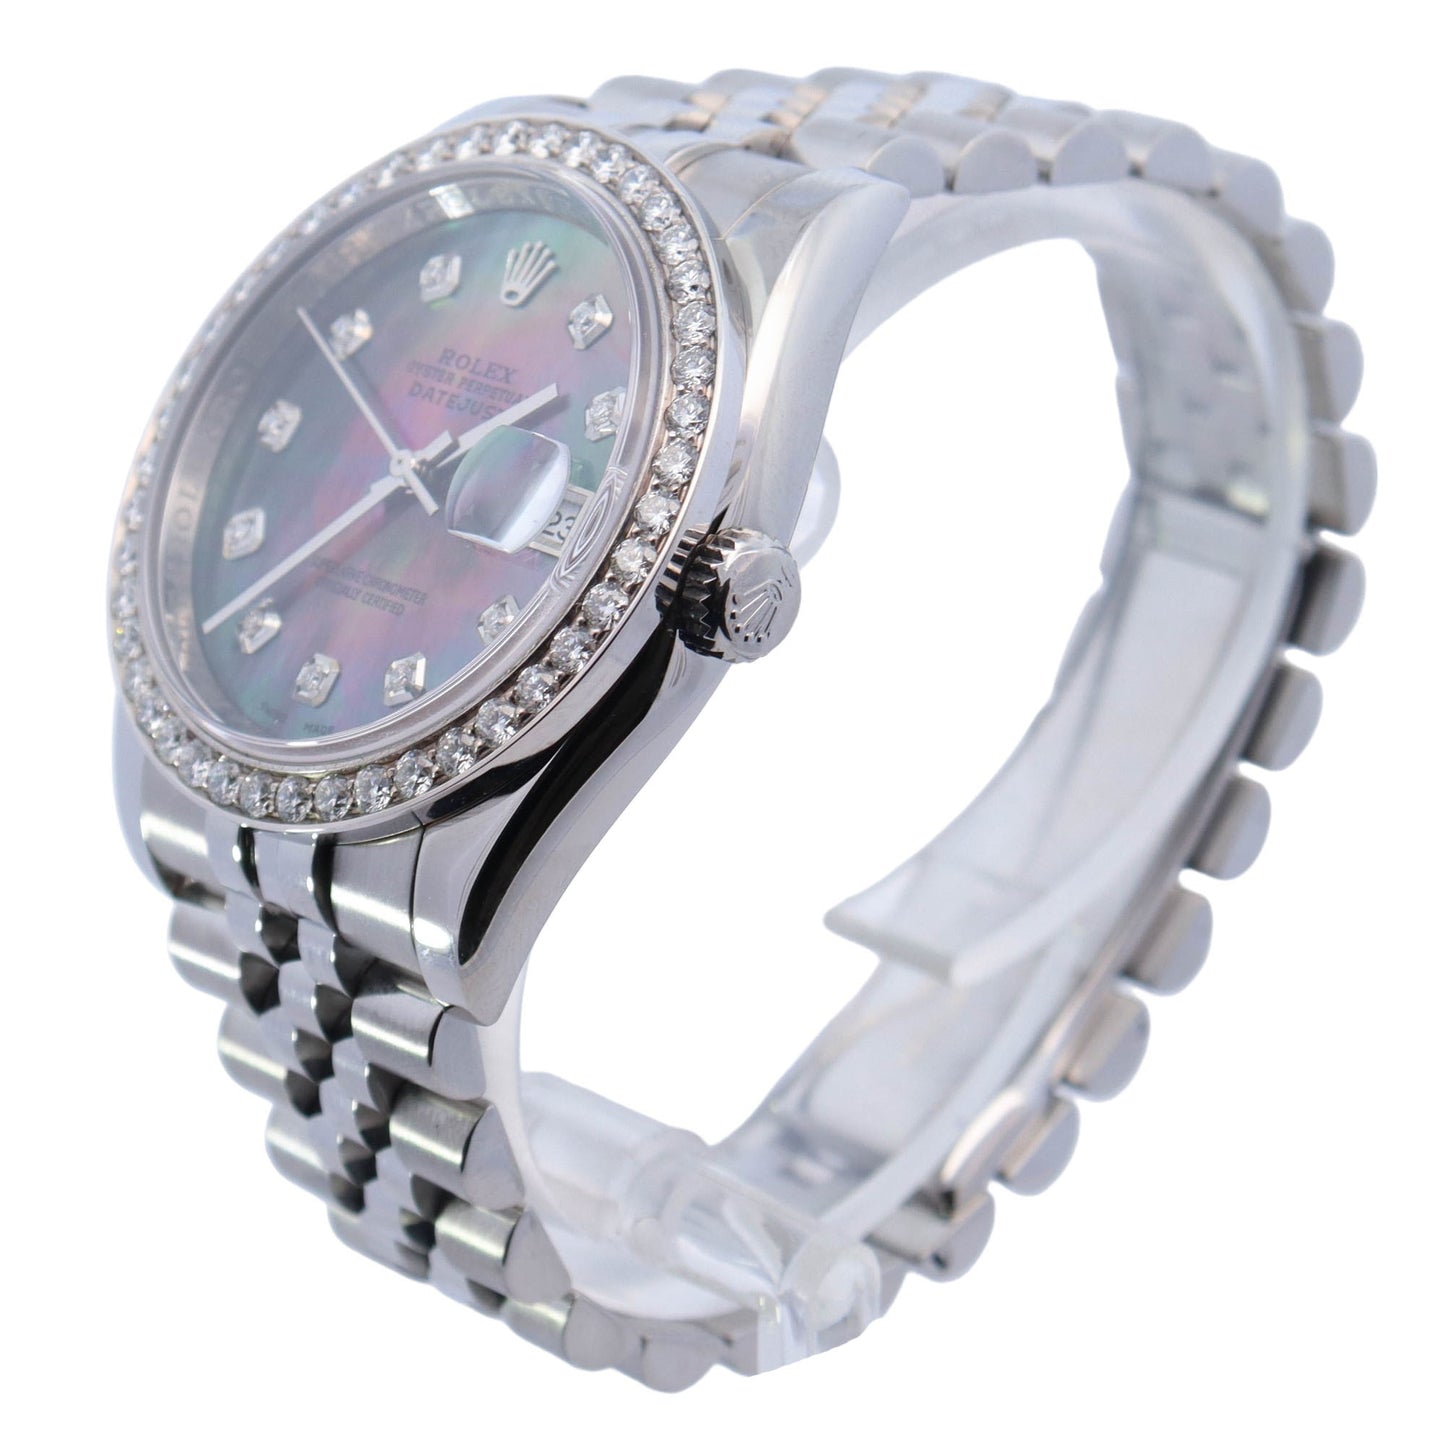 Rolex Datejust Stainless Steel 36mm Custom Dark MOP Diamond Dial Watch Reference# 116234